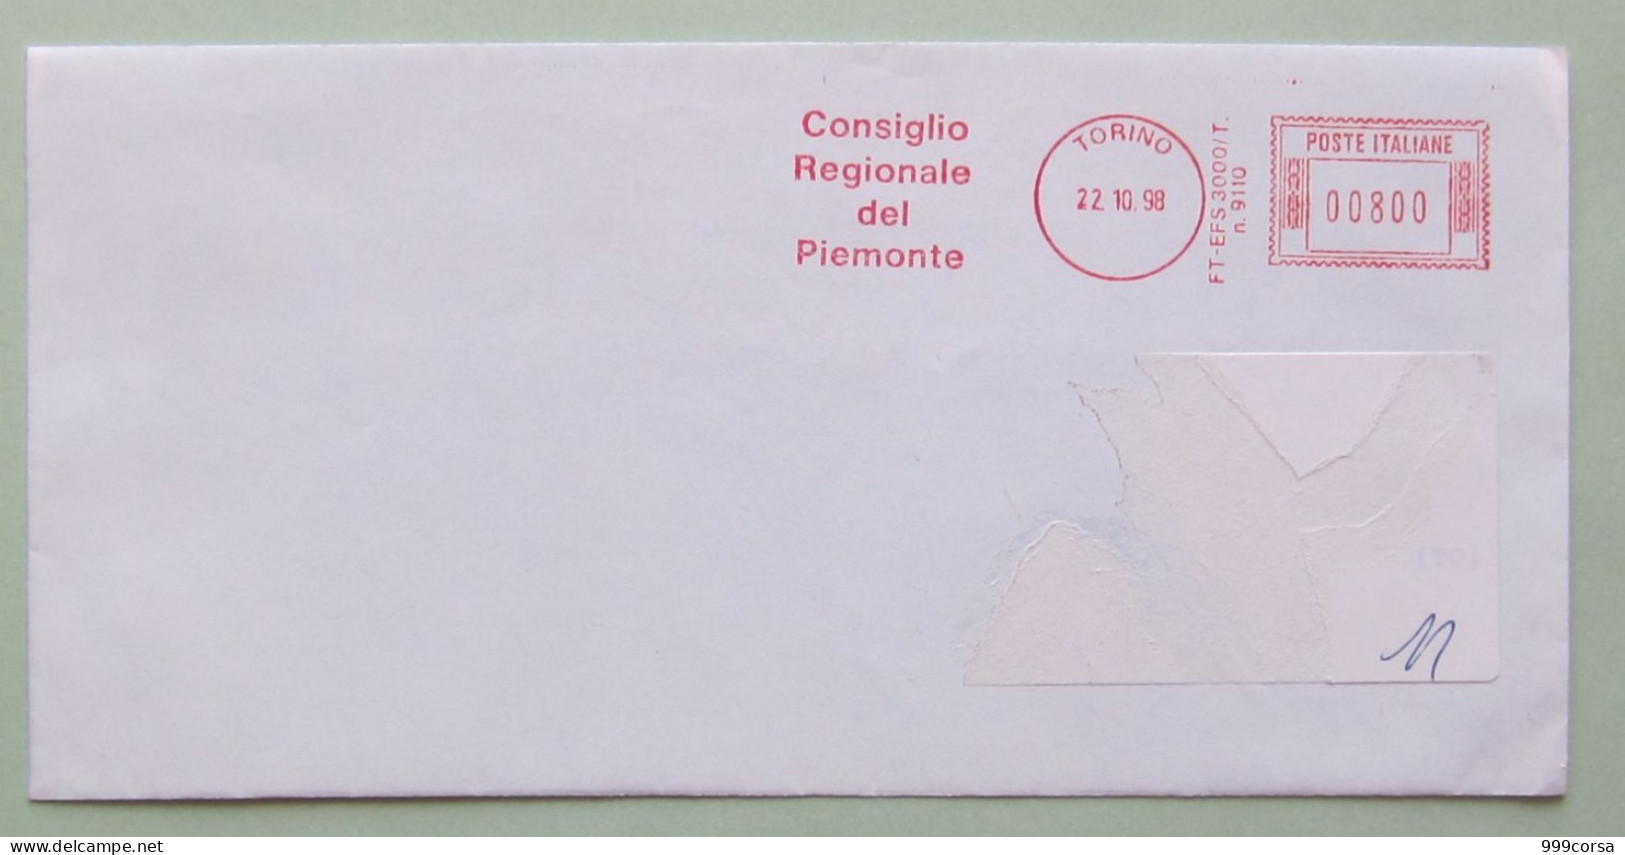 Consiglio Regionale Piemonte, 22-10-98, 800 Lire, Politica, Amministrazione, Partiti, Ema, Meter, Freistempel - Franking Machines (EMA)